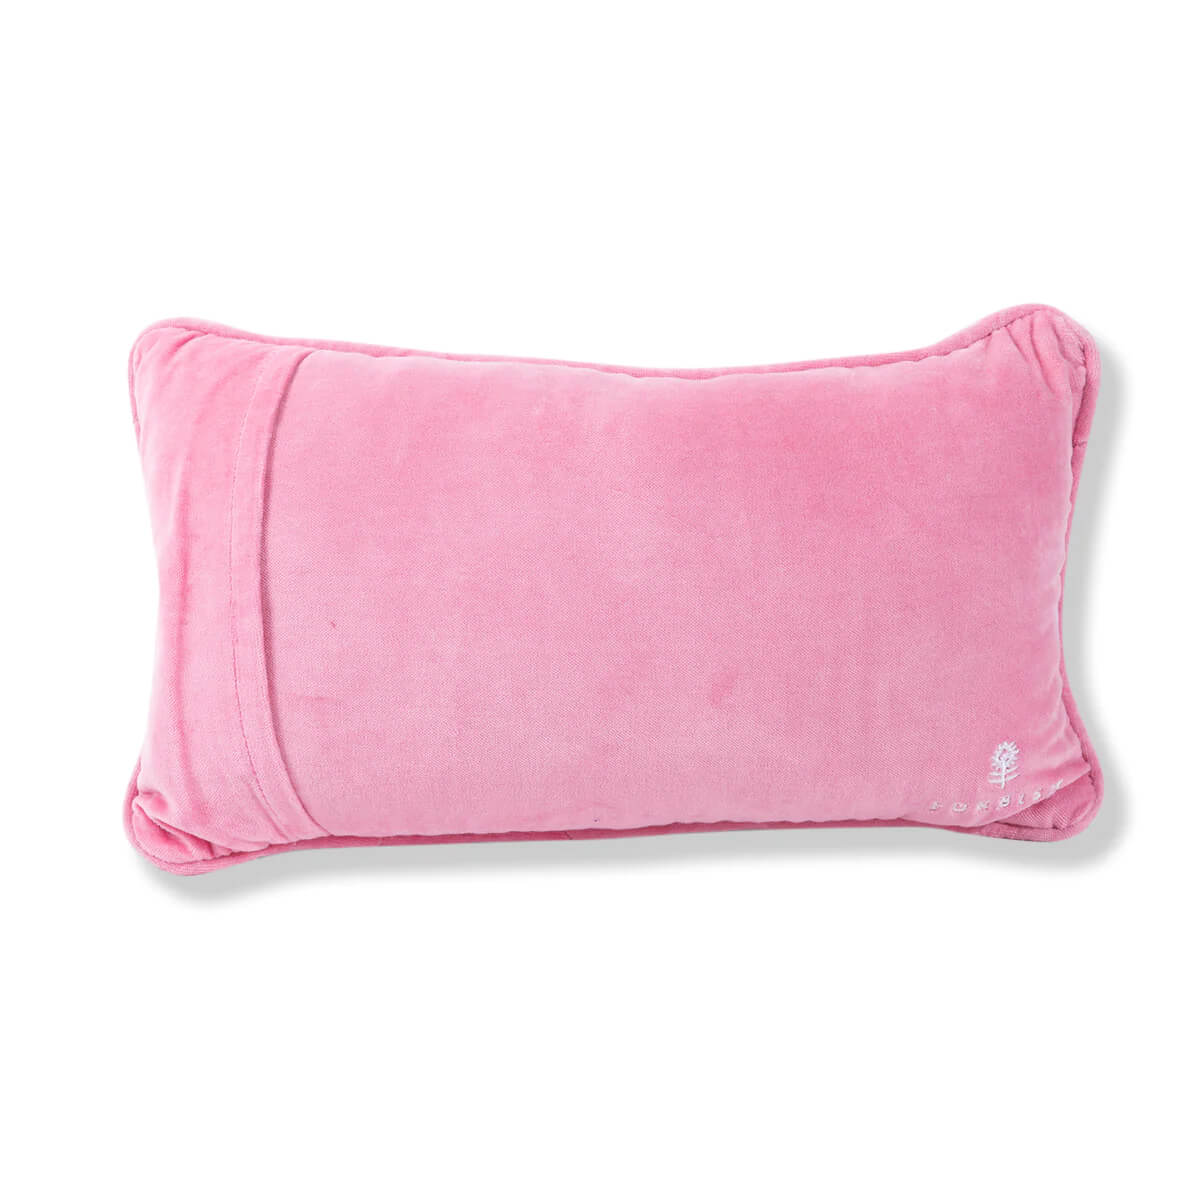 Furbish Studio Ain't Nobody Needlepoint Pillow back pink | MILK MONEY milkmoney.co | women's accessories. cute accessories. trendy accessories. cute accessories for girls. ladies accessories. women's fashion accessories.